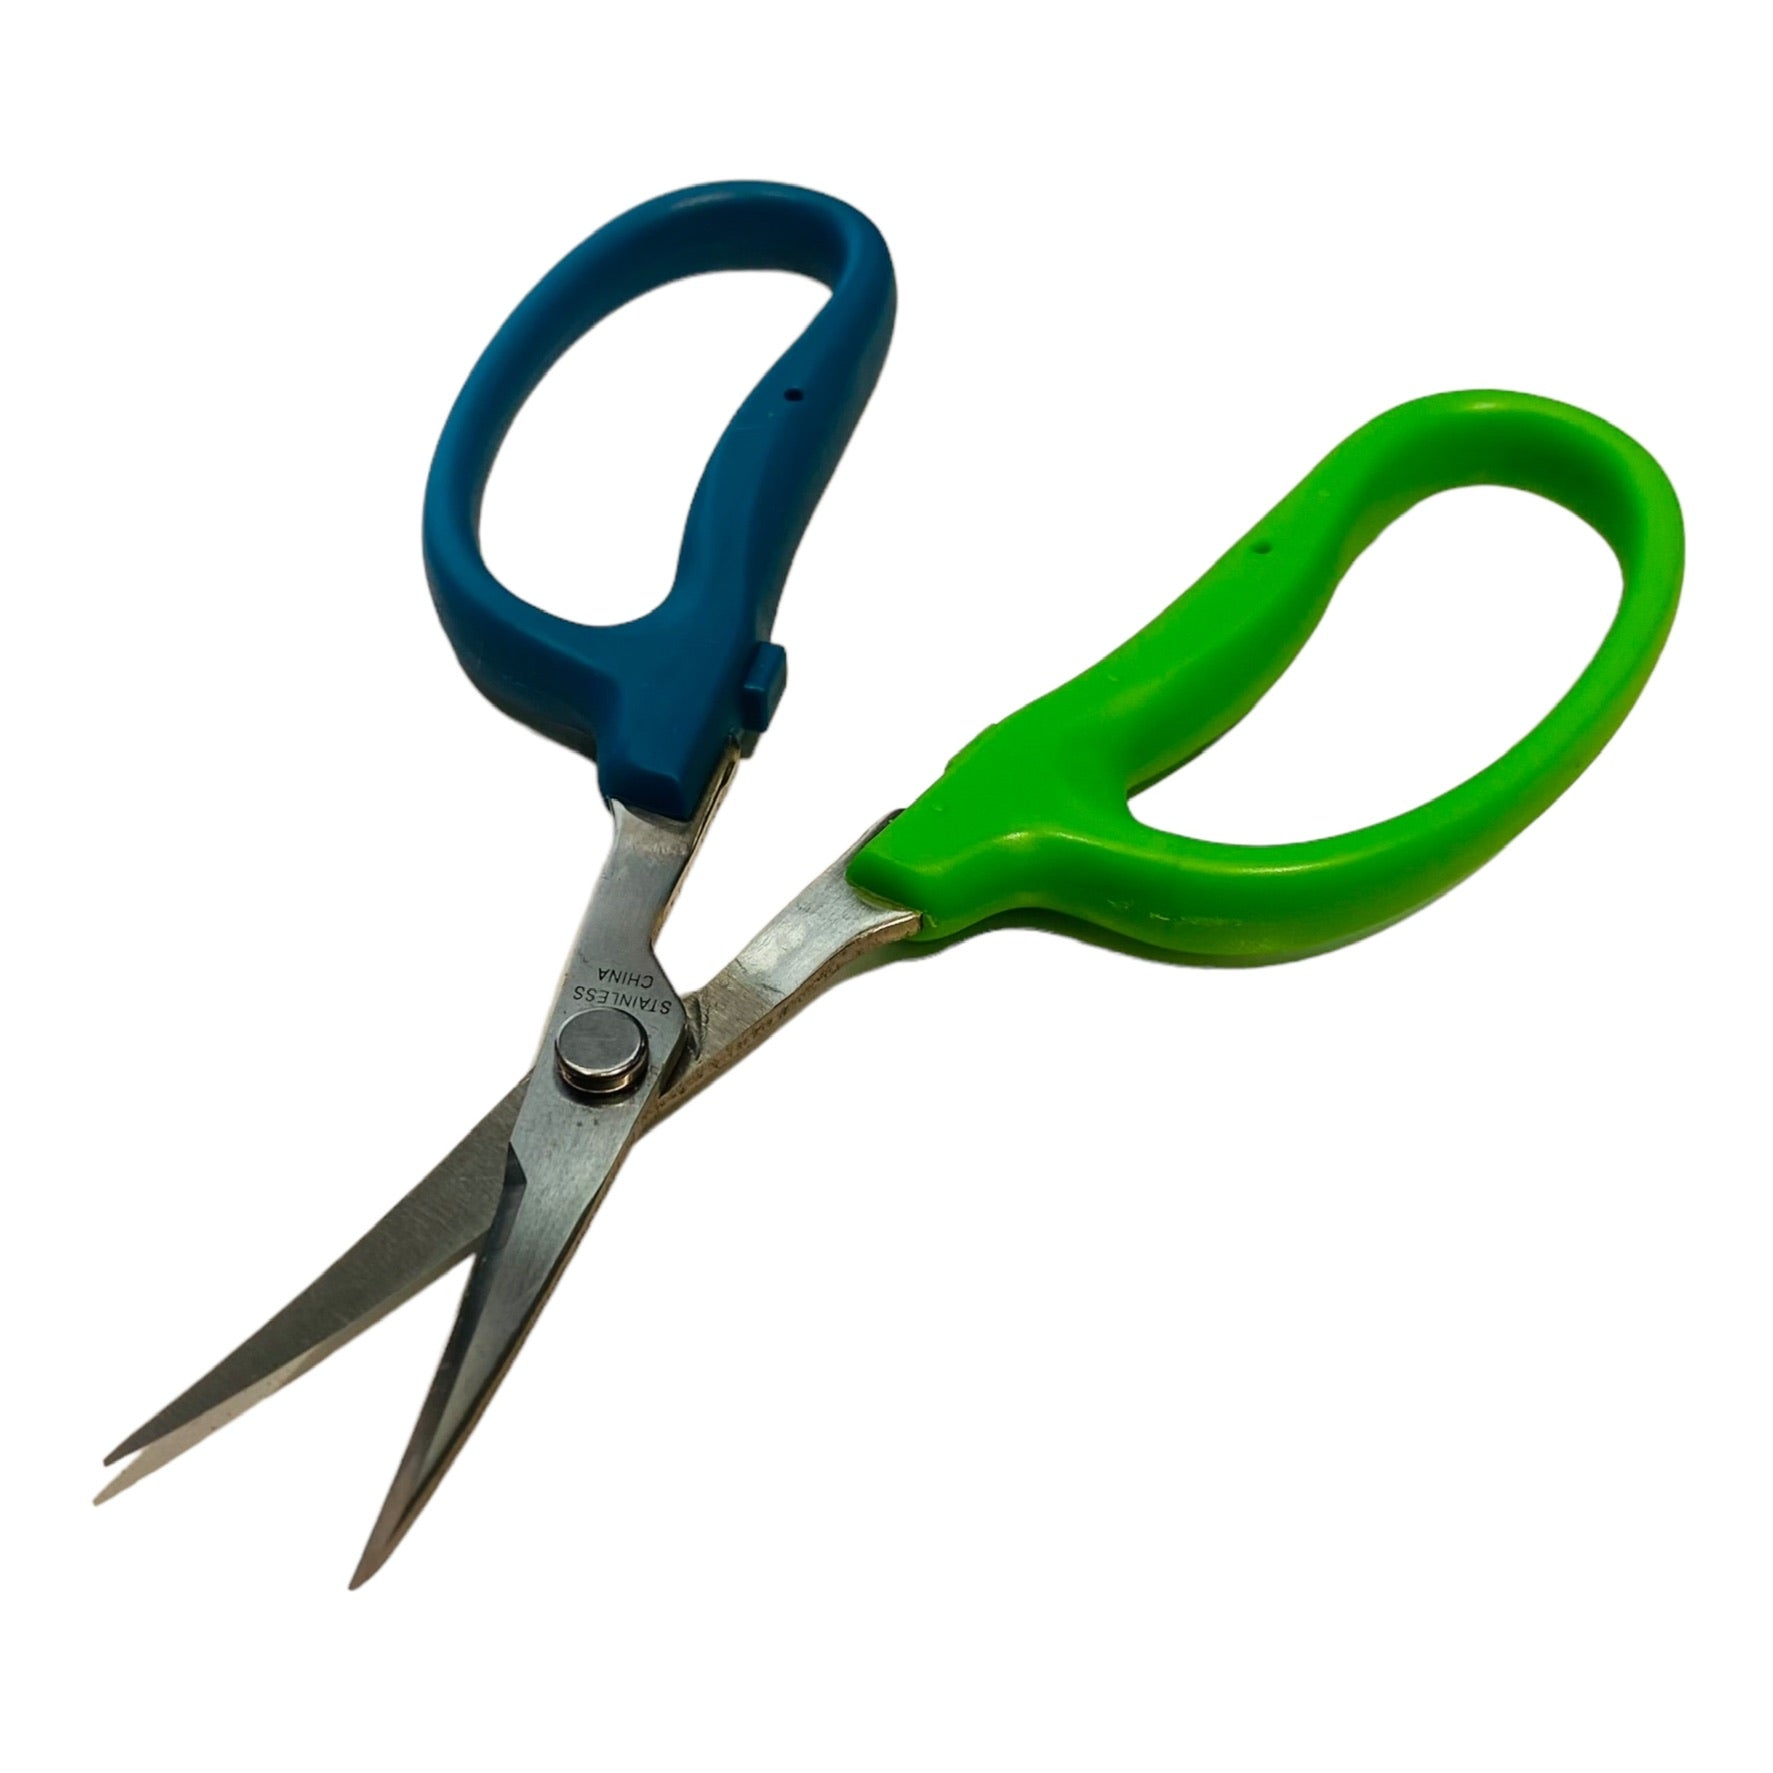 The Green Scissors - SPX420 Scissors - Curved Blade